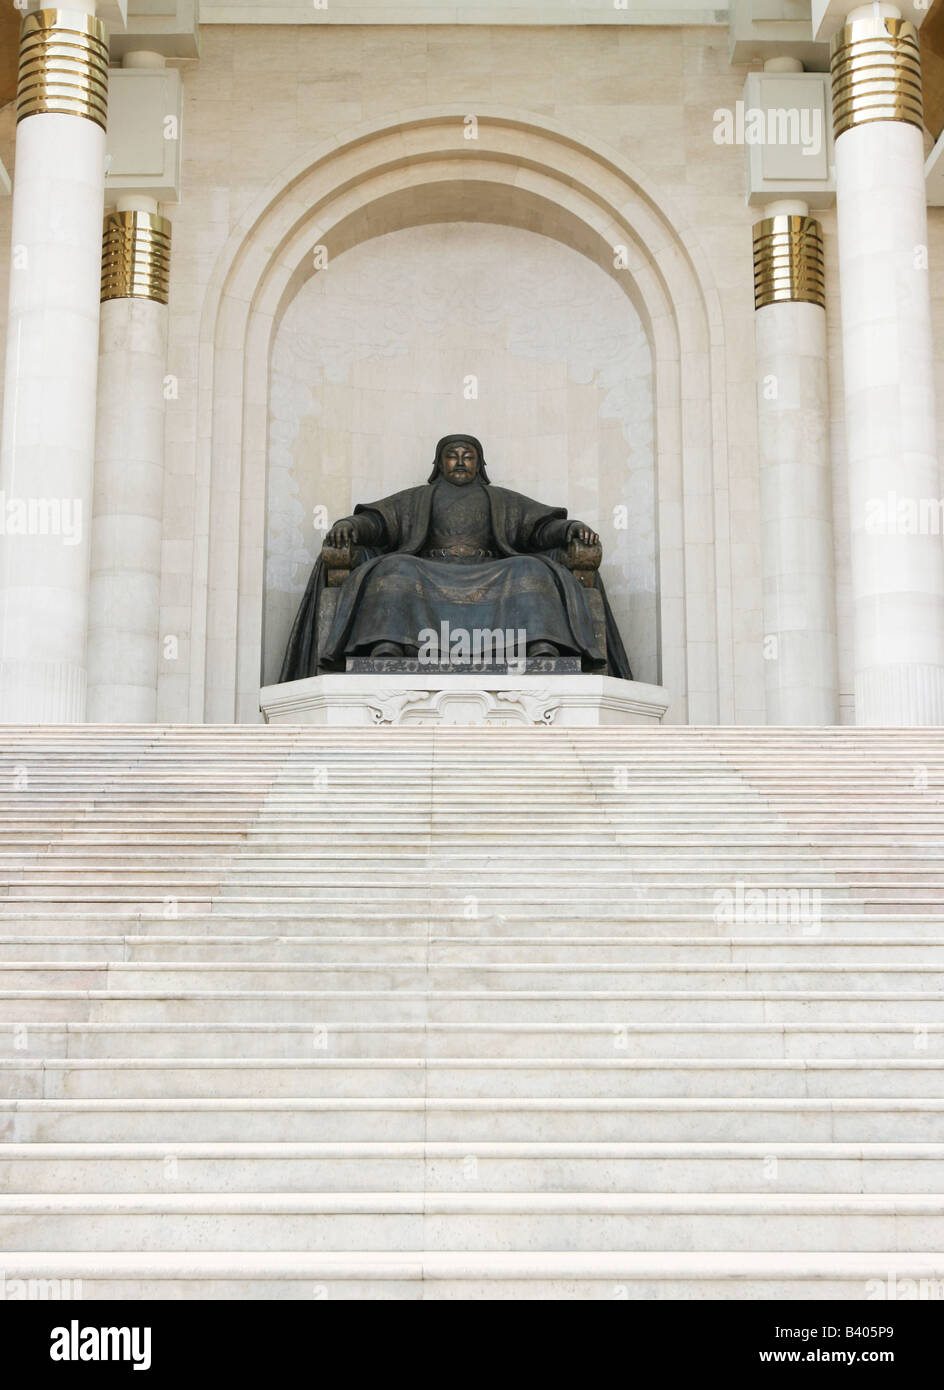 Ulan Bator Mongolia statue of Genghis Khan Stock Photo